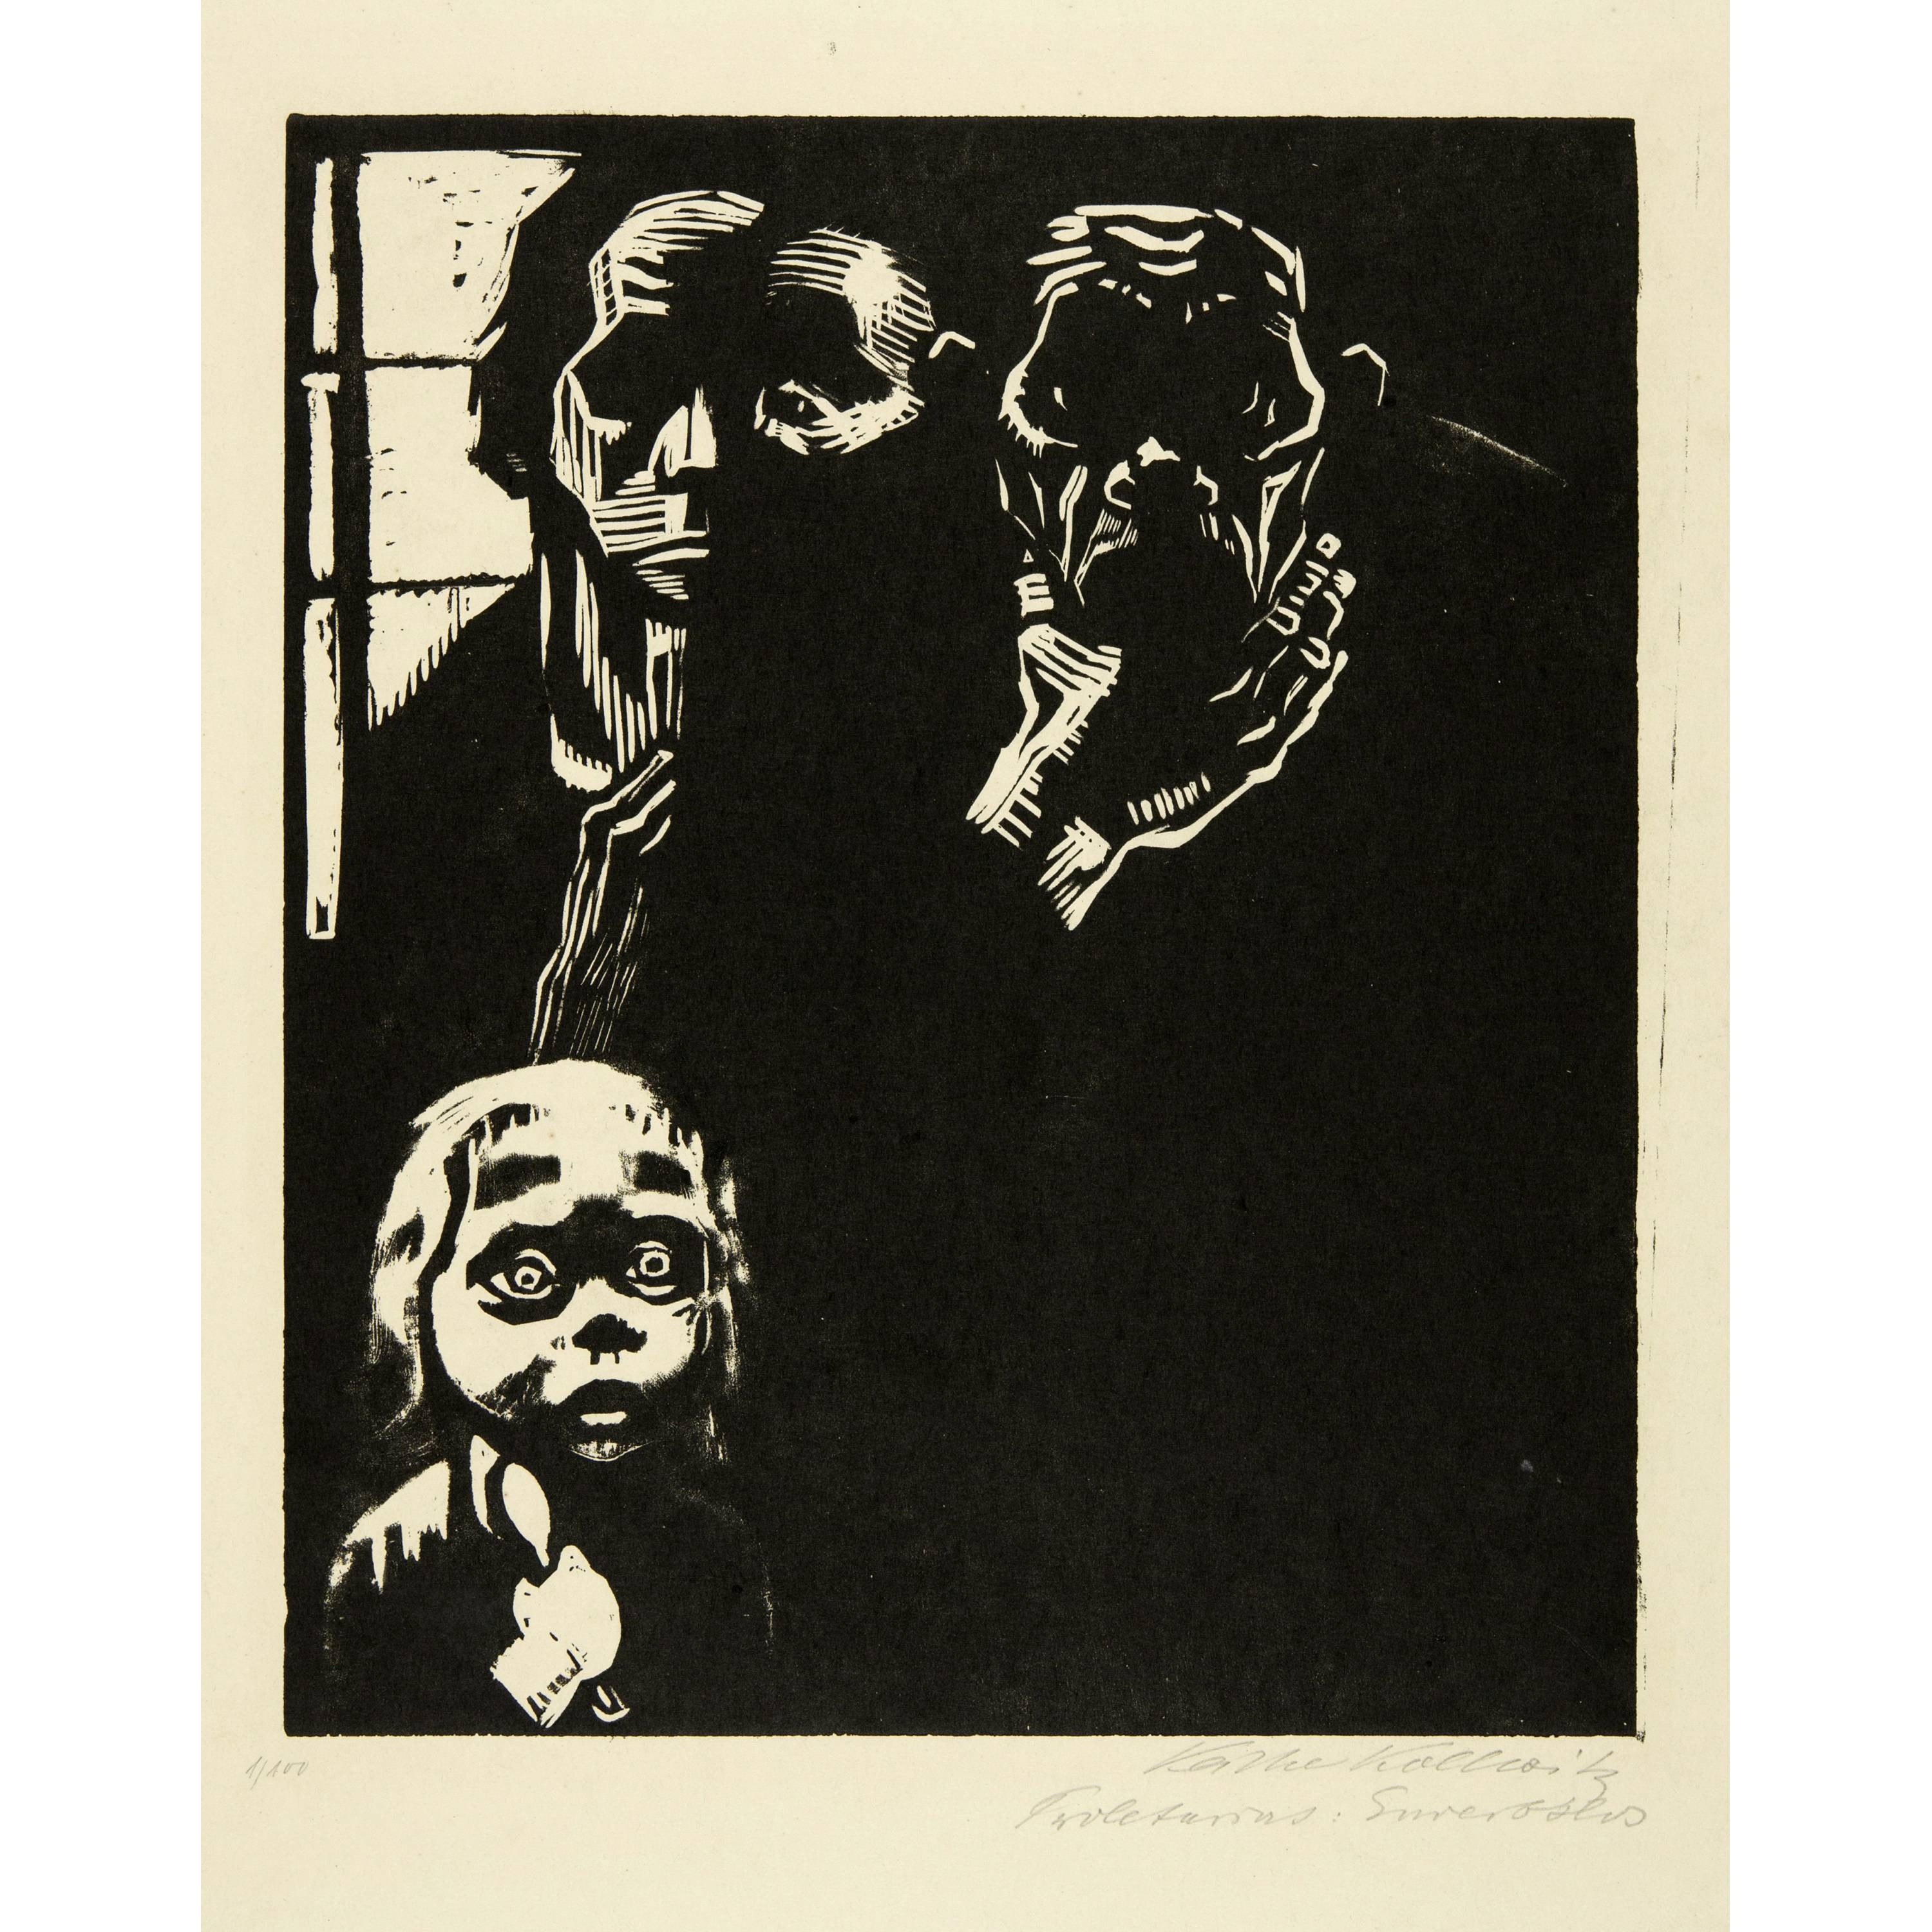 ErwerbslosBlatt 1 der Folge "Proletariat" by Käthe Kollwitz, 1924-1925